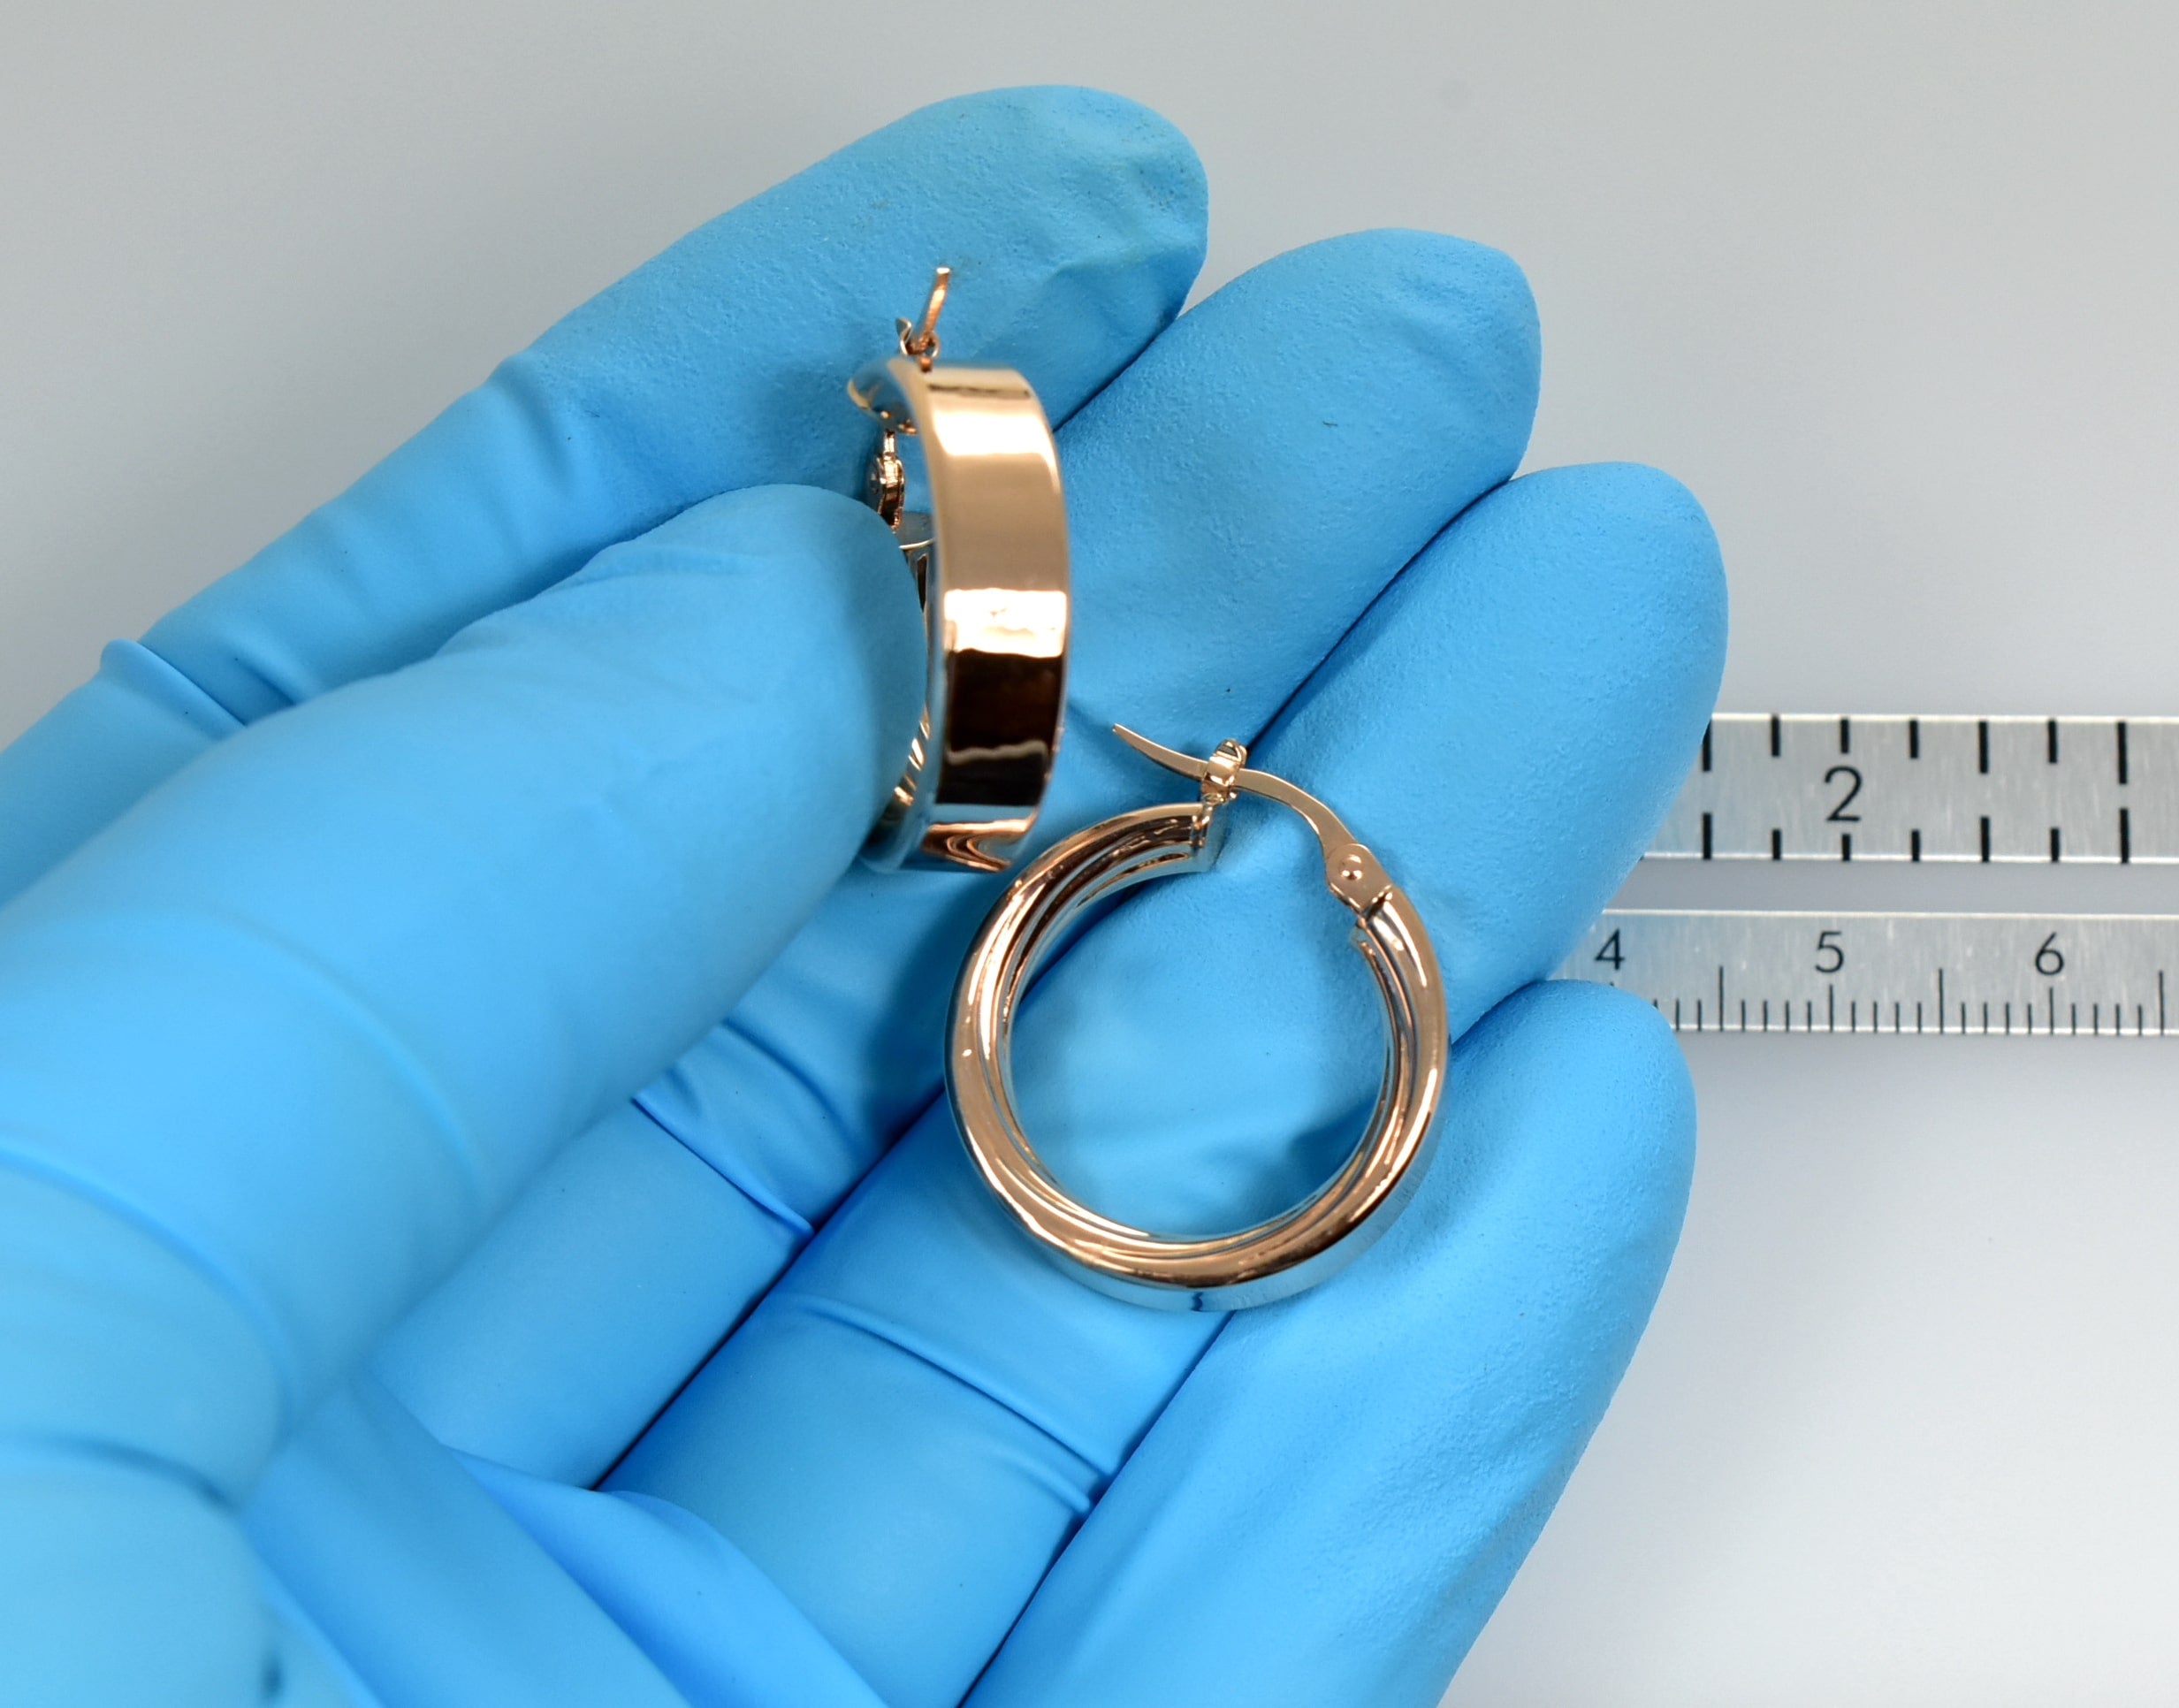 14k Rose Gold Round Square Tube Textured Inside Diamond Cut Hoop Earrings 21mm x 5.5mm